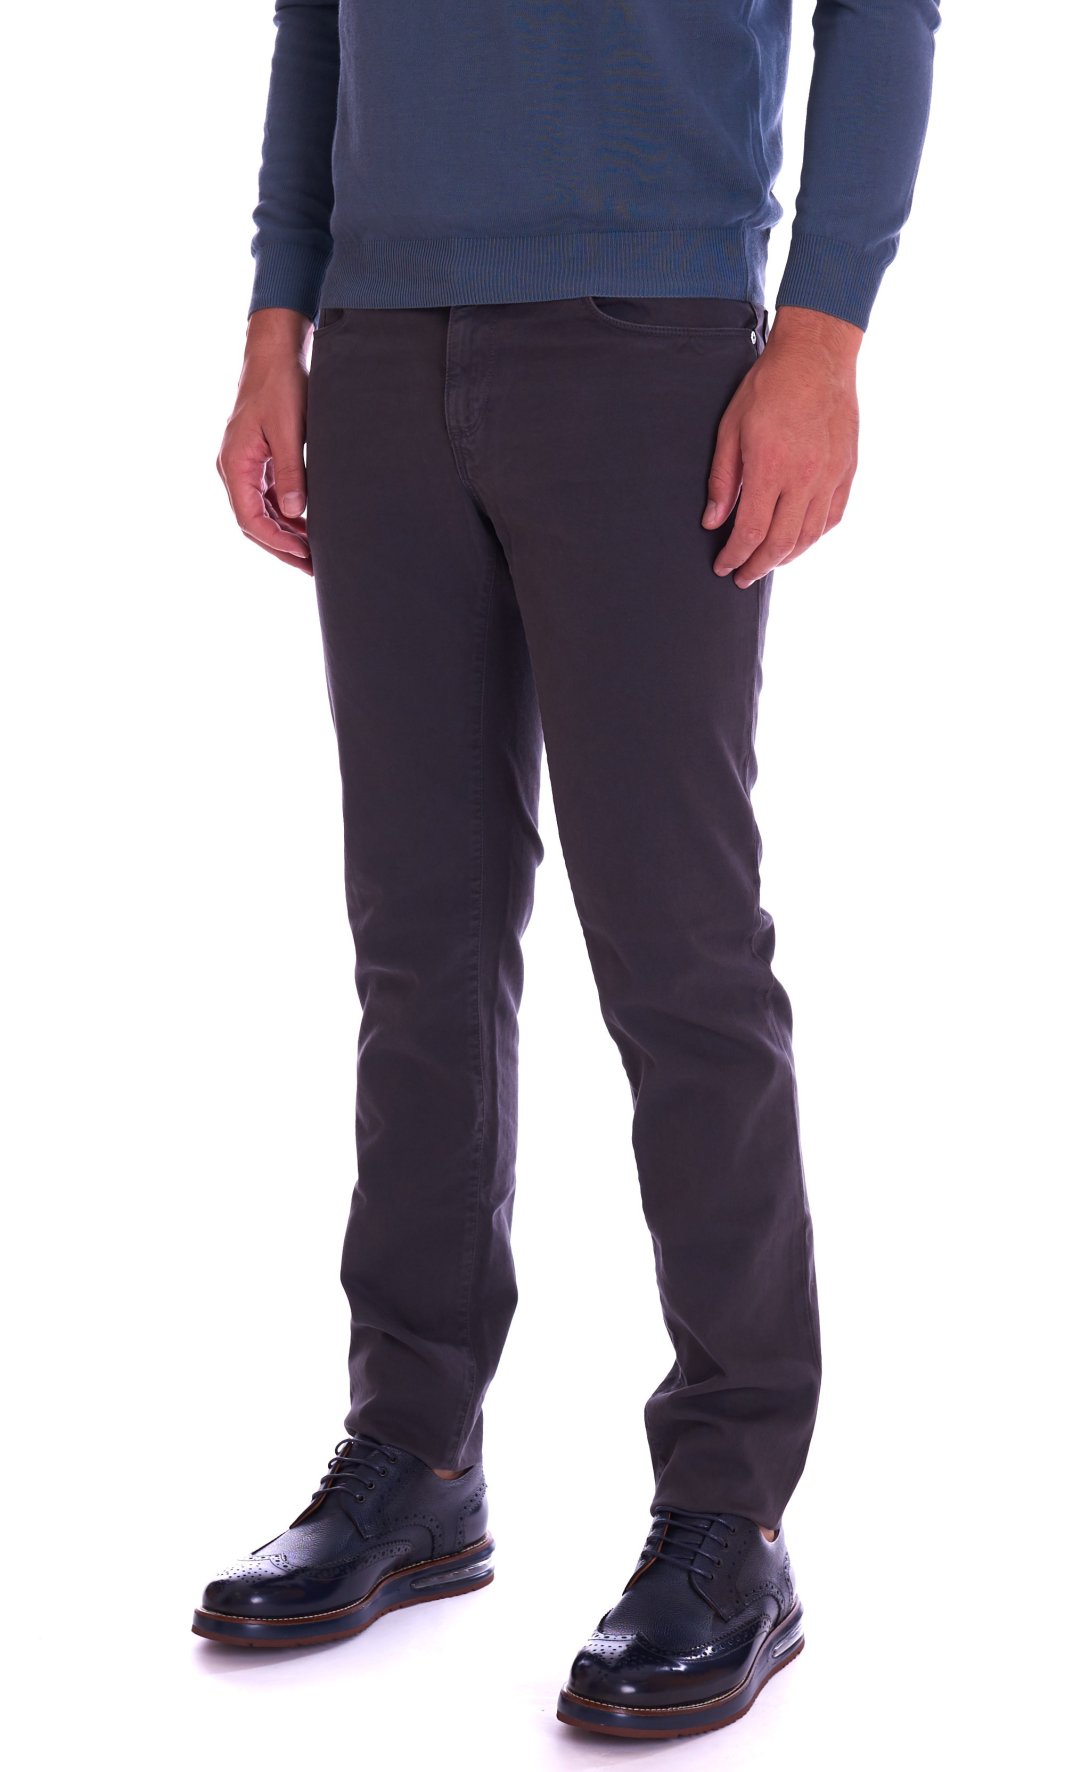 Men's pants Trussardi jeans 370 close mid waist dark grey - 52J00007